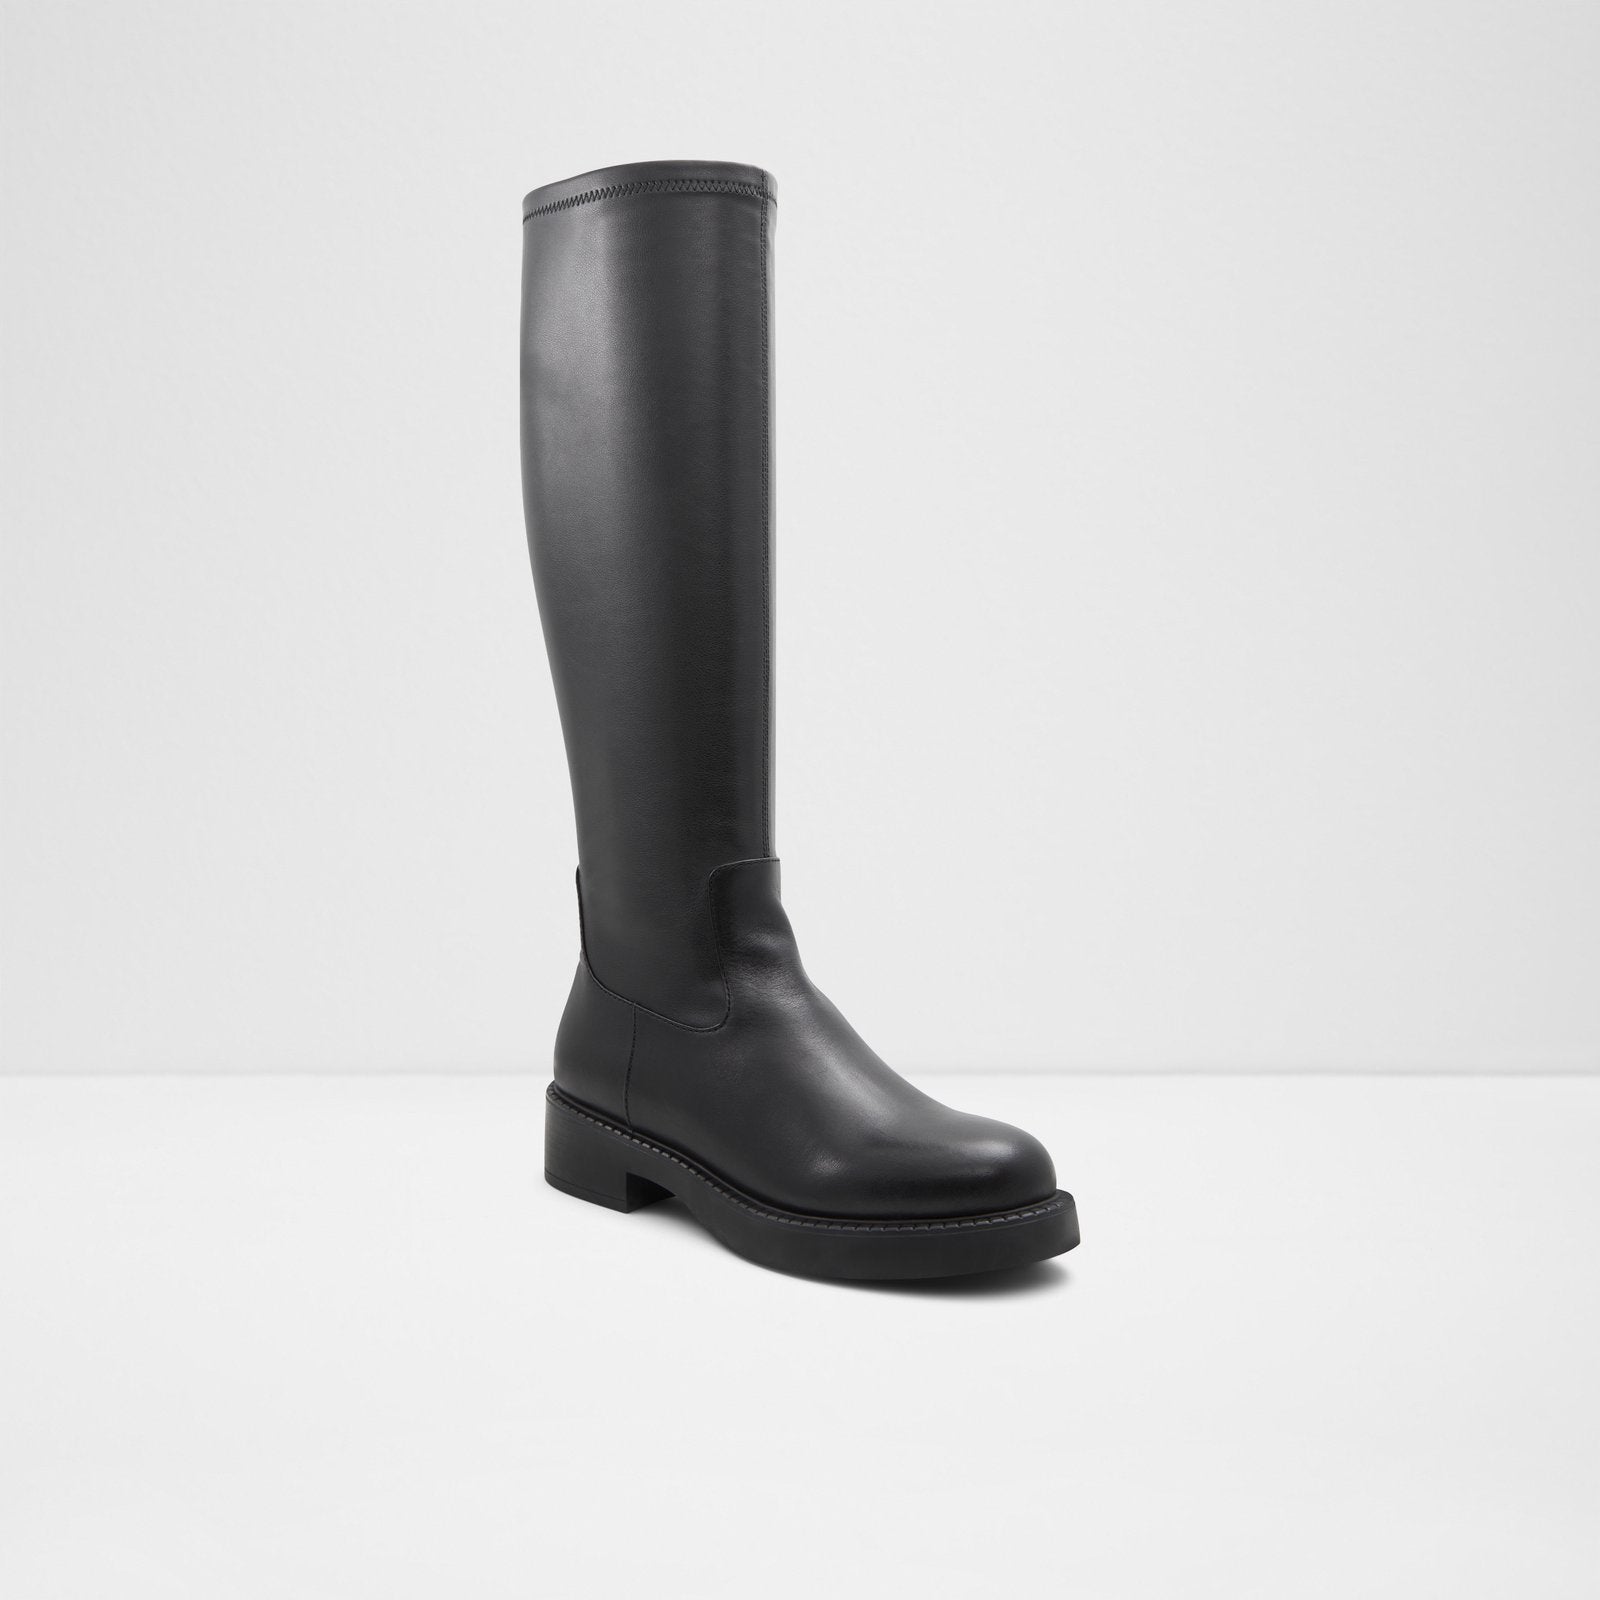 Aldo Women's Knee-High Boot Anne (Black) – ALDO Shoes UK